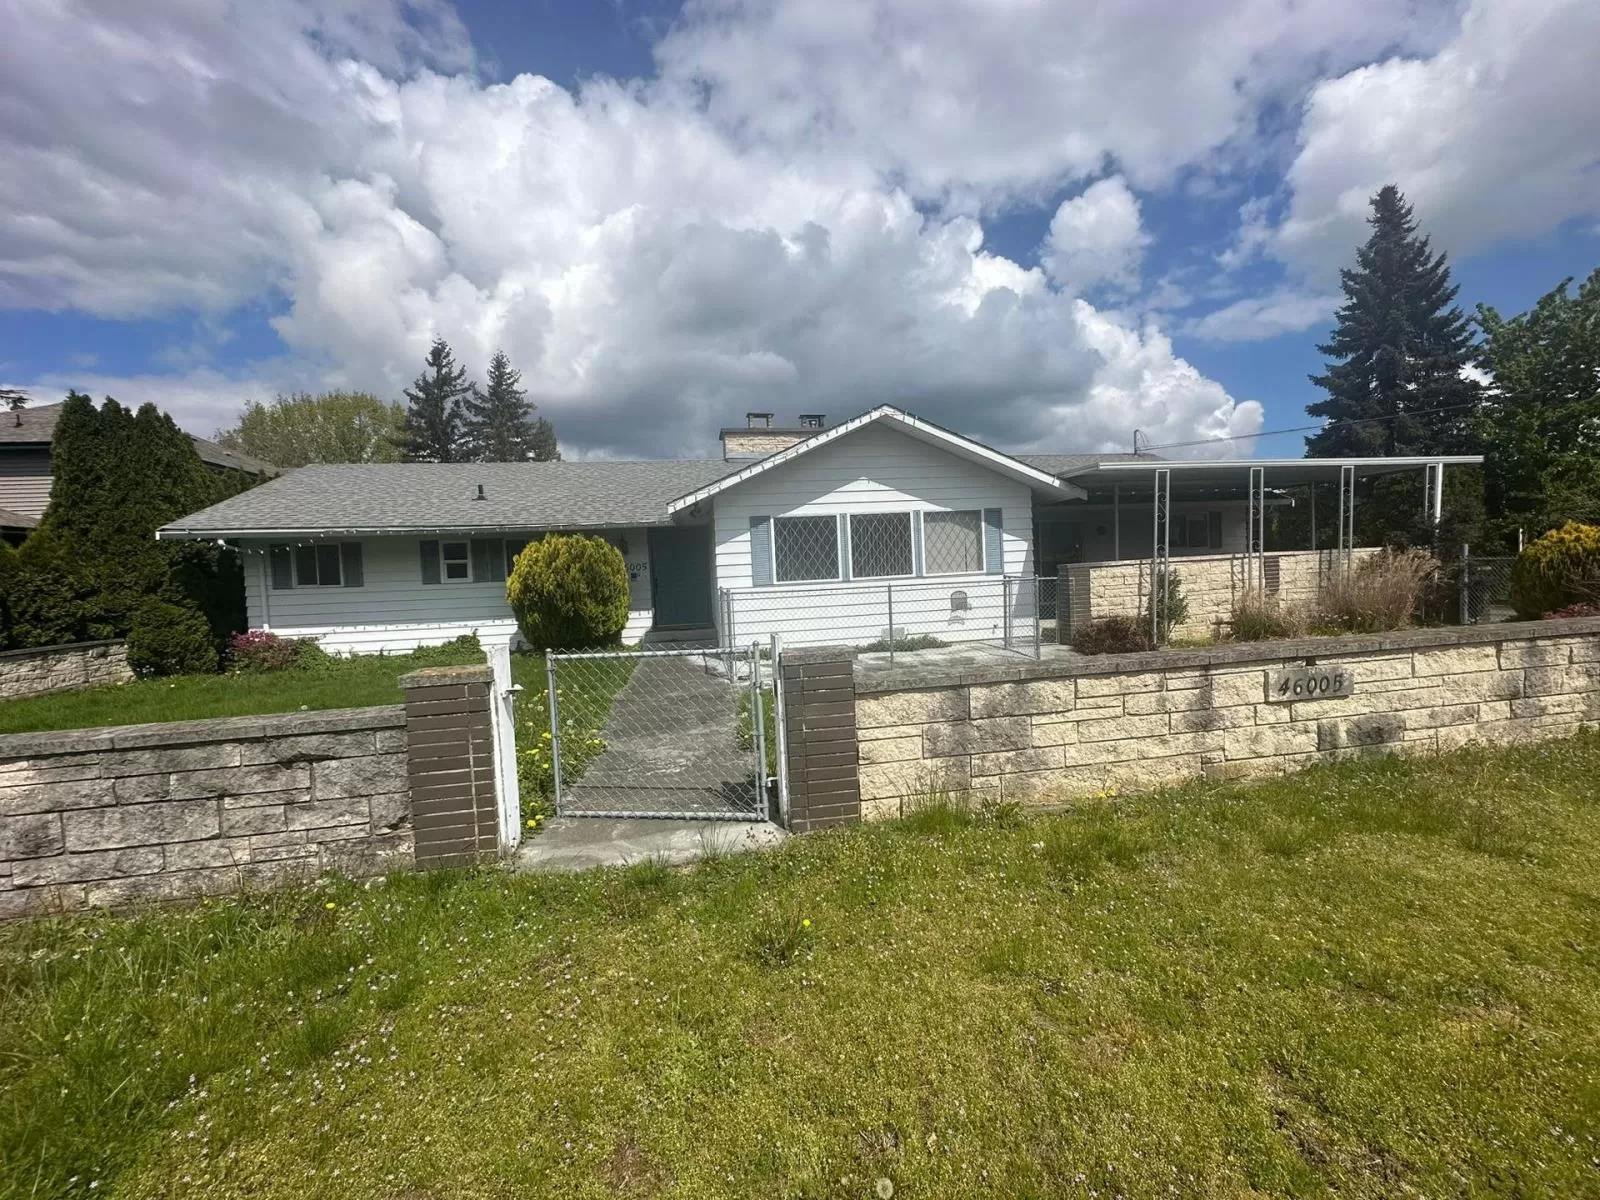 House for rent: 46005 Stevenson Road, Chilliwack, British Columbia V2R 2G2